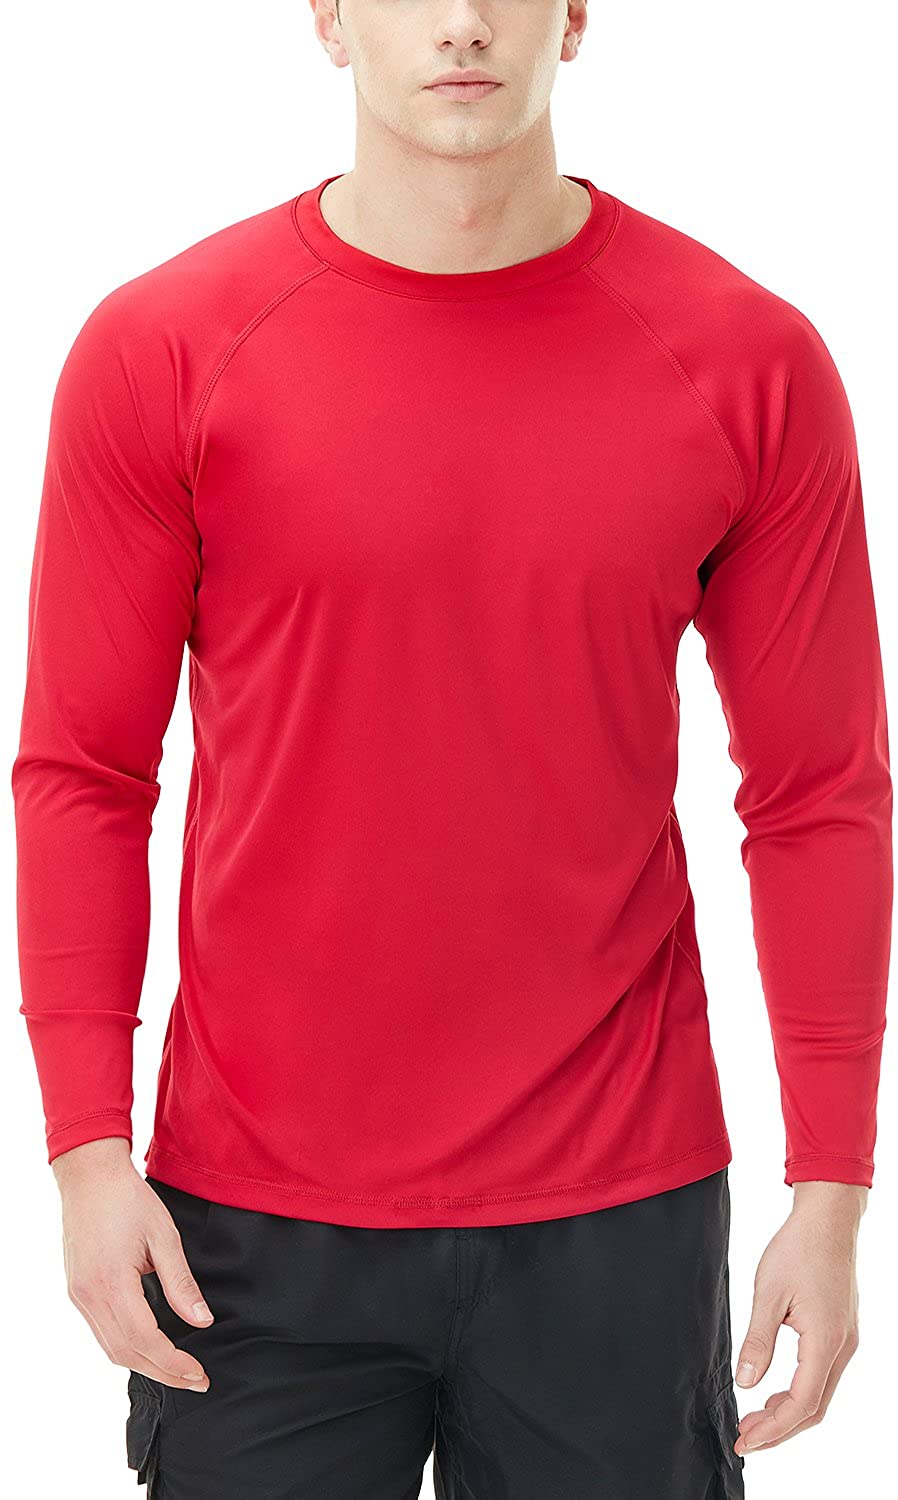 UPF 50 Loose-Fit Long Sleeve Shir Details about   TSLA 1 or 2 Pack Men's Rashguard Swim Shirts